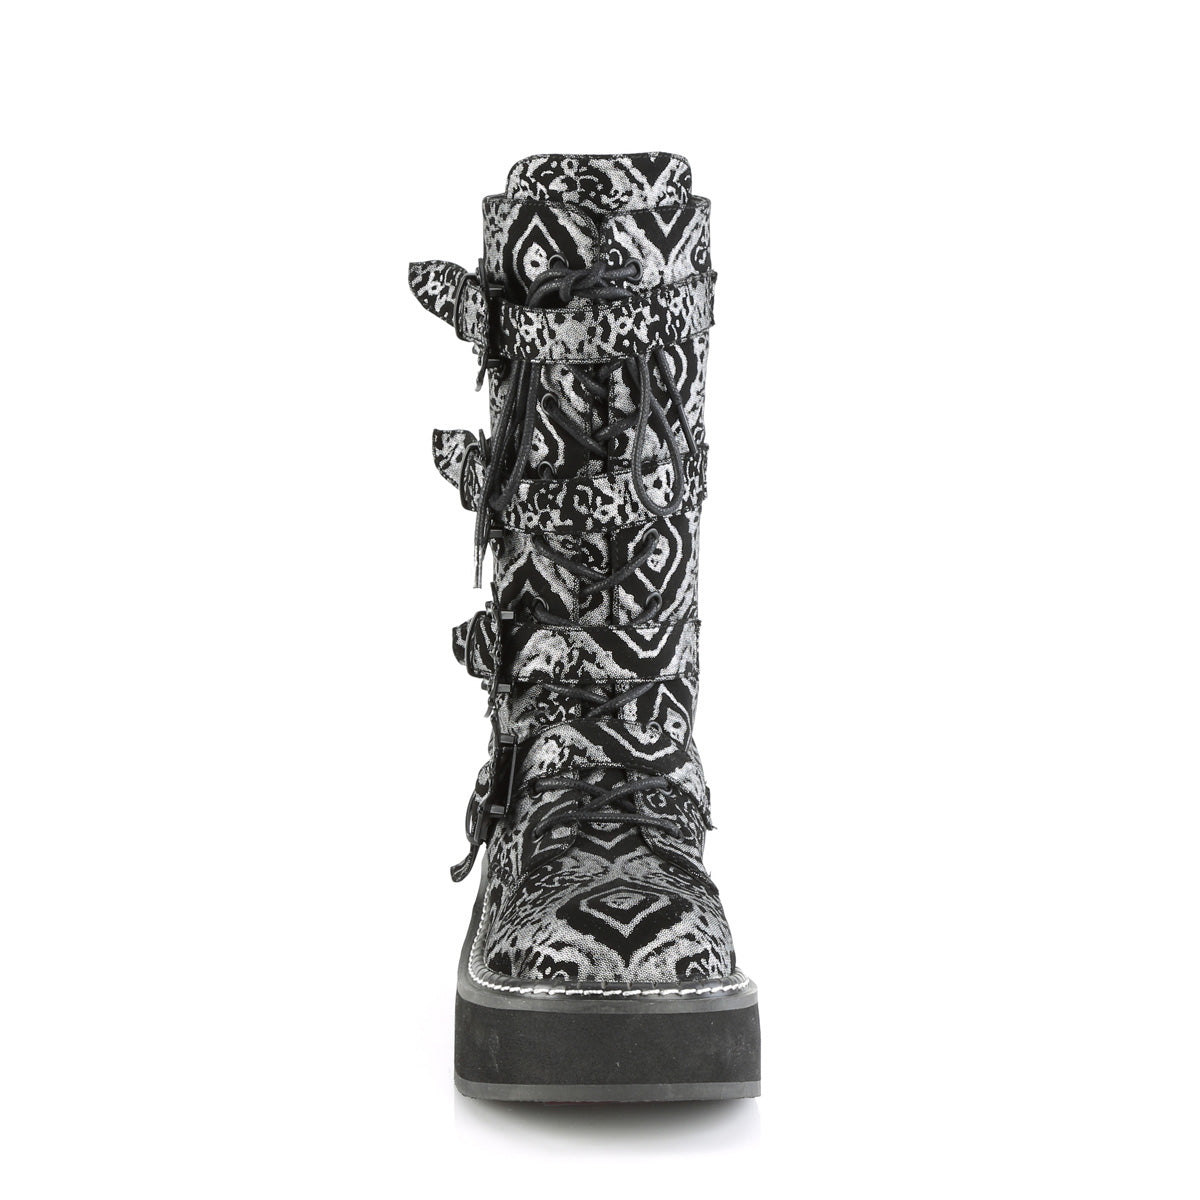 EMILY-322 Demonia Black-Silver Faux Nubuck Leather Women's Mid-Calf & Knee High Boots [Demonia Cult Alternative Footwear]